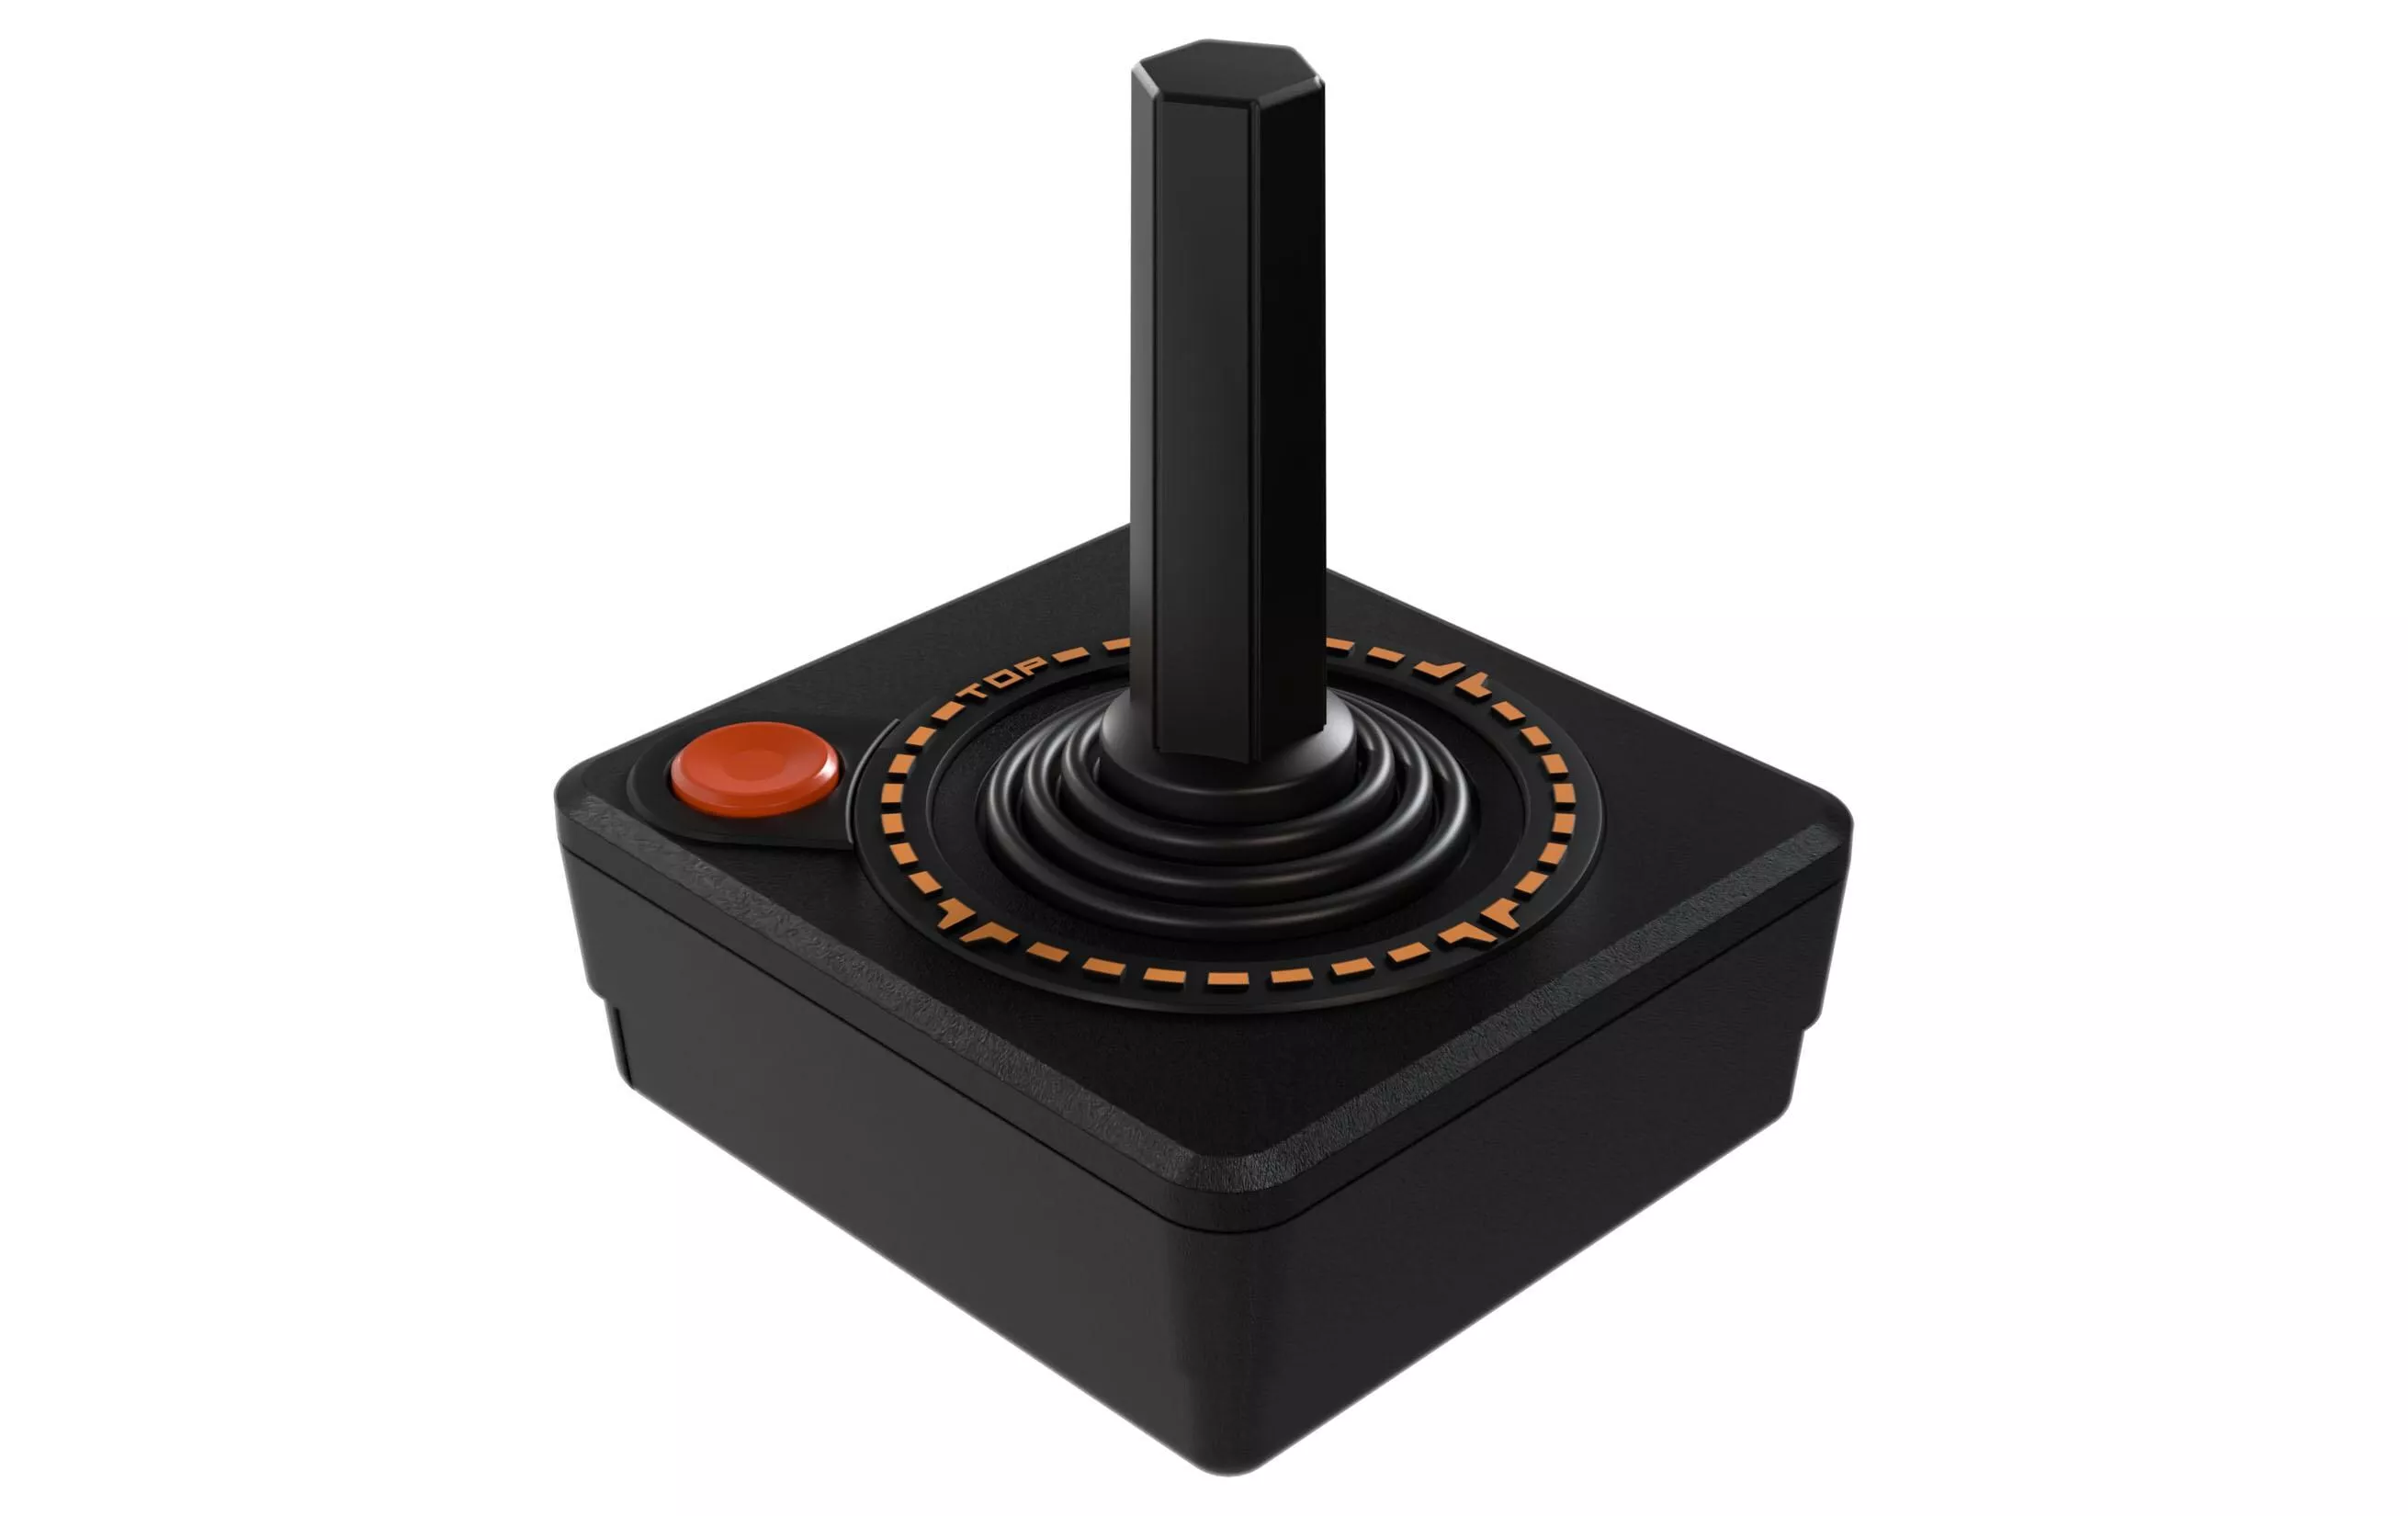 THECXSTICK (Solus Atari USB Joystick \u2013 black)